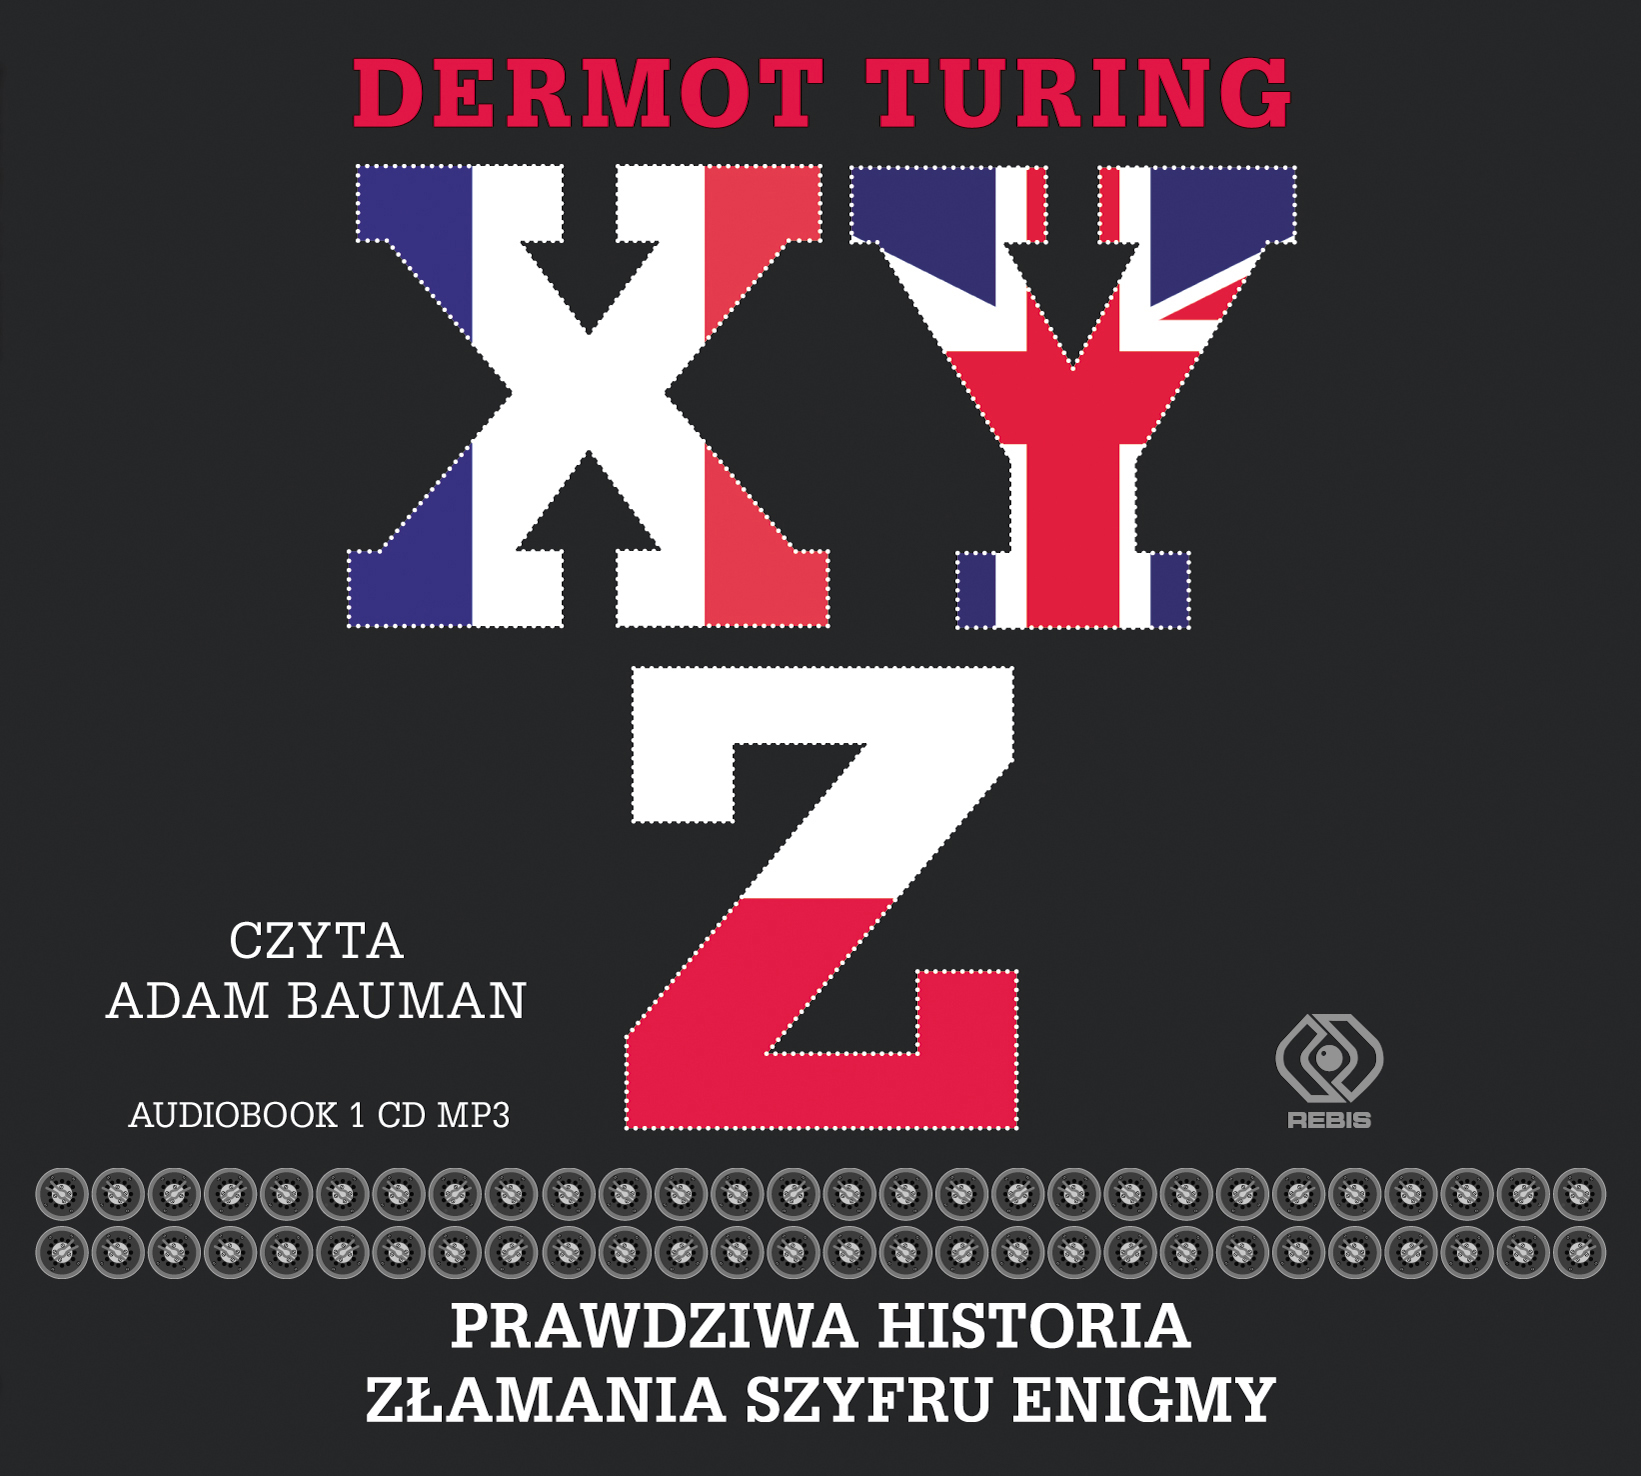 Turing Dermot - XYZ